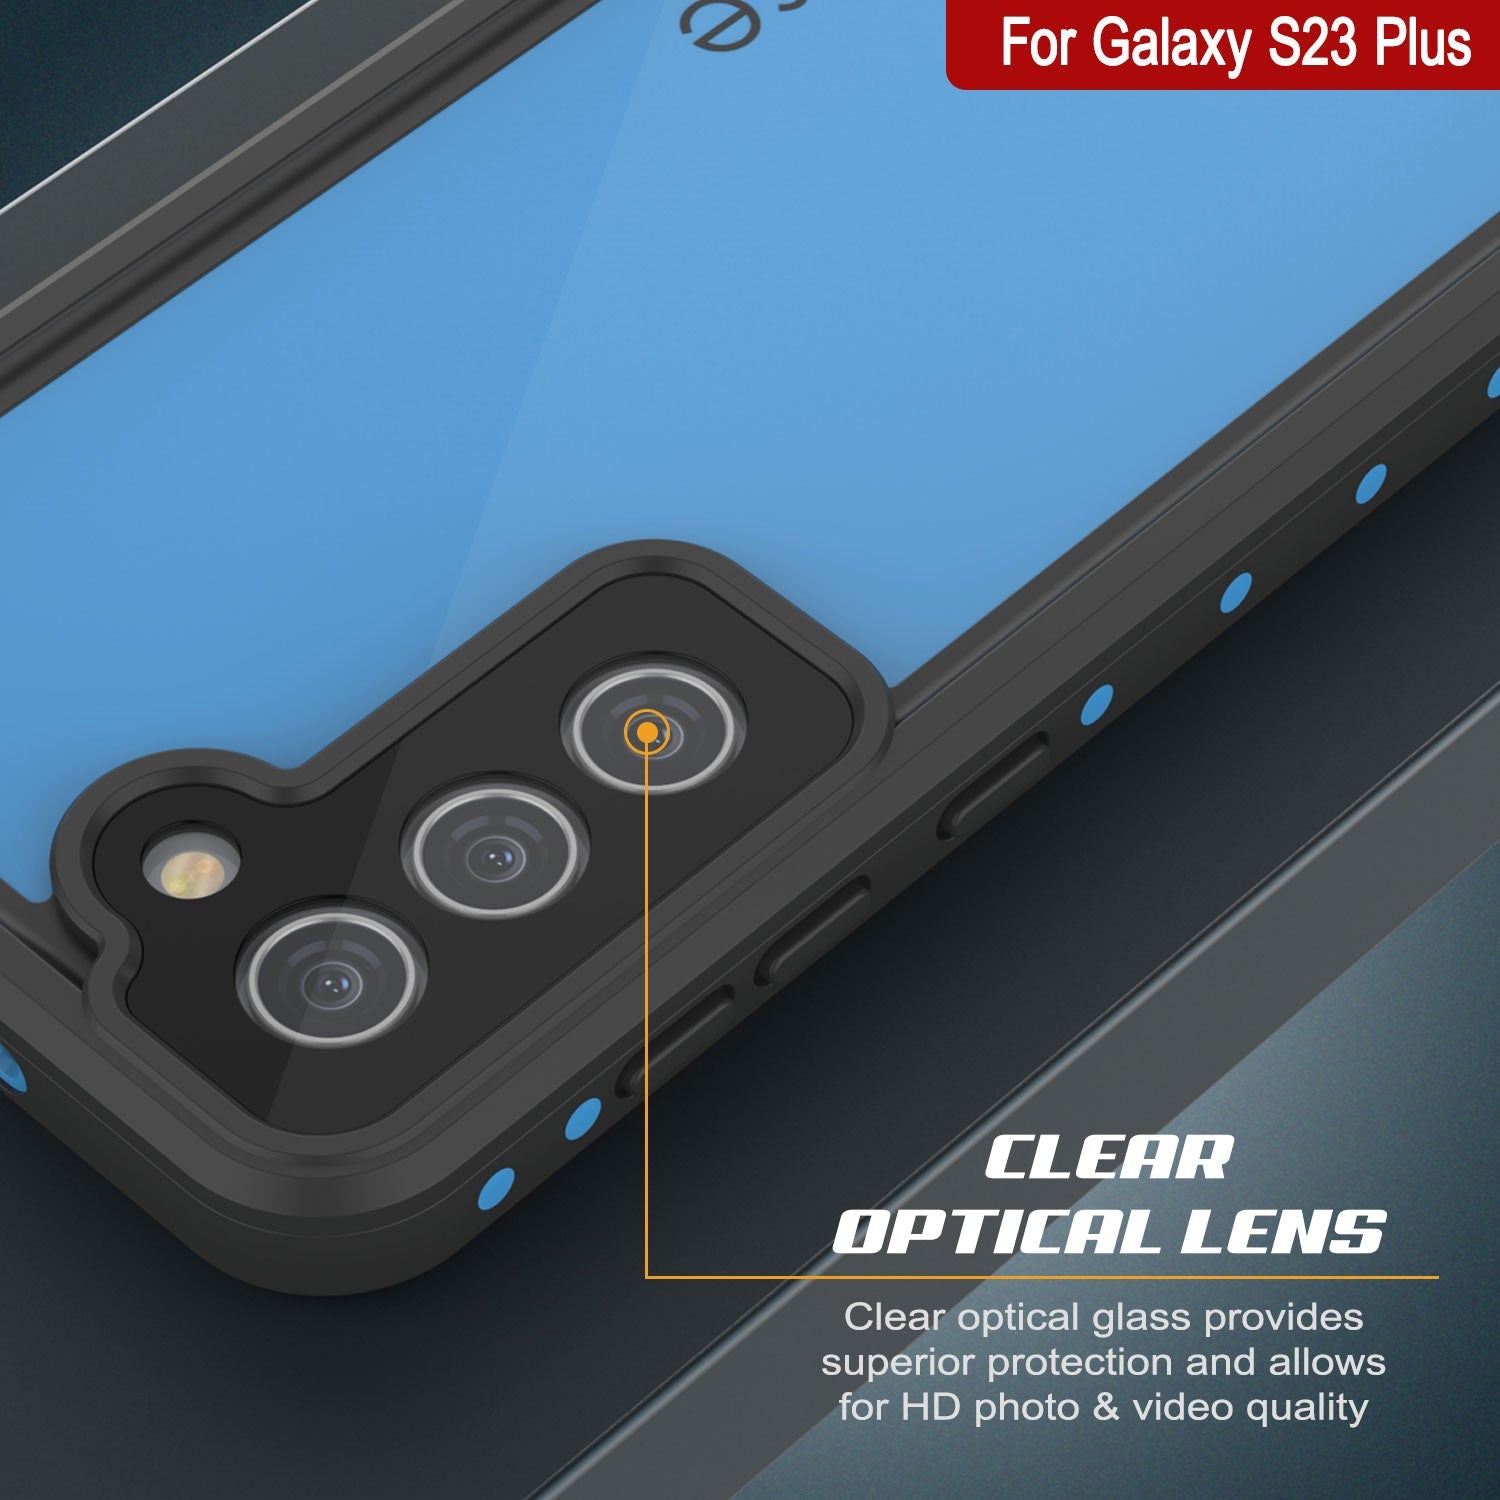 Galaxy S23+ Plus Waterproof Case PunkCase StudStar Light Blue Thin 6.6ft Underwater IP68 ShockProof